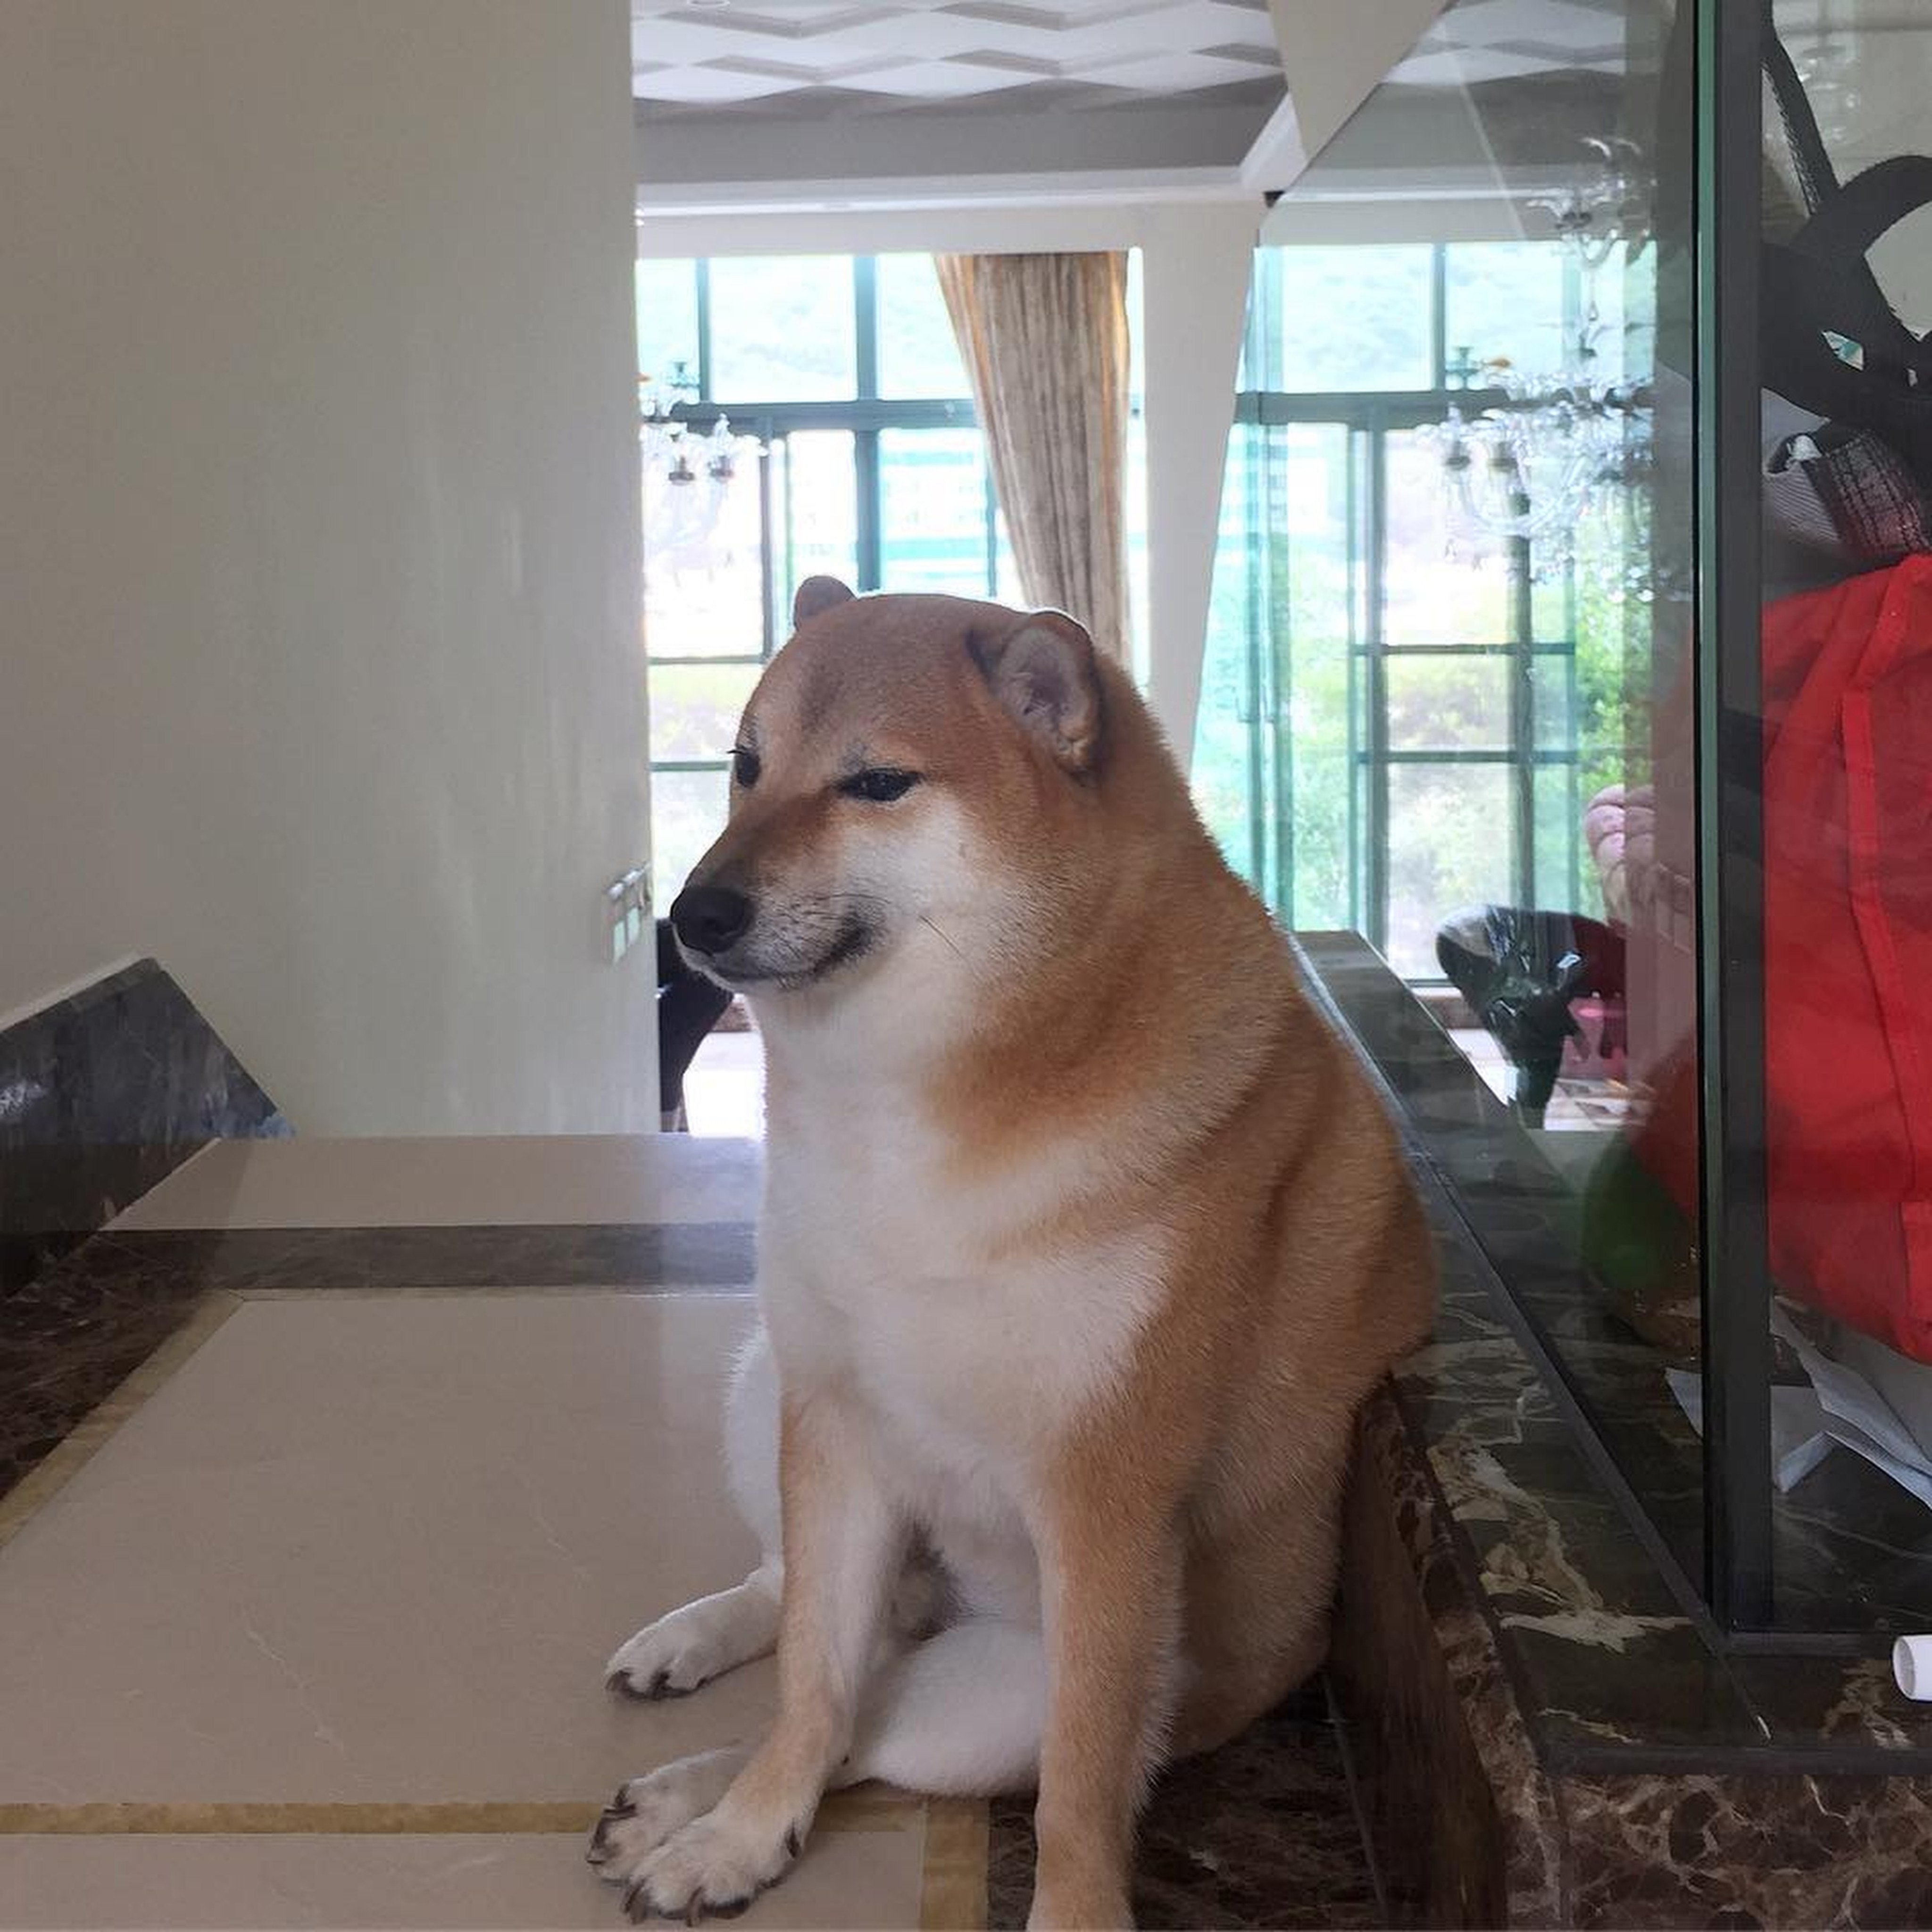 Shiba Inu Who Became Viral 'Cheems' Doge Meme Died After Cancer Battle